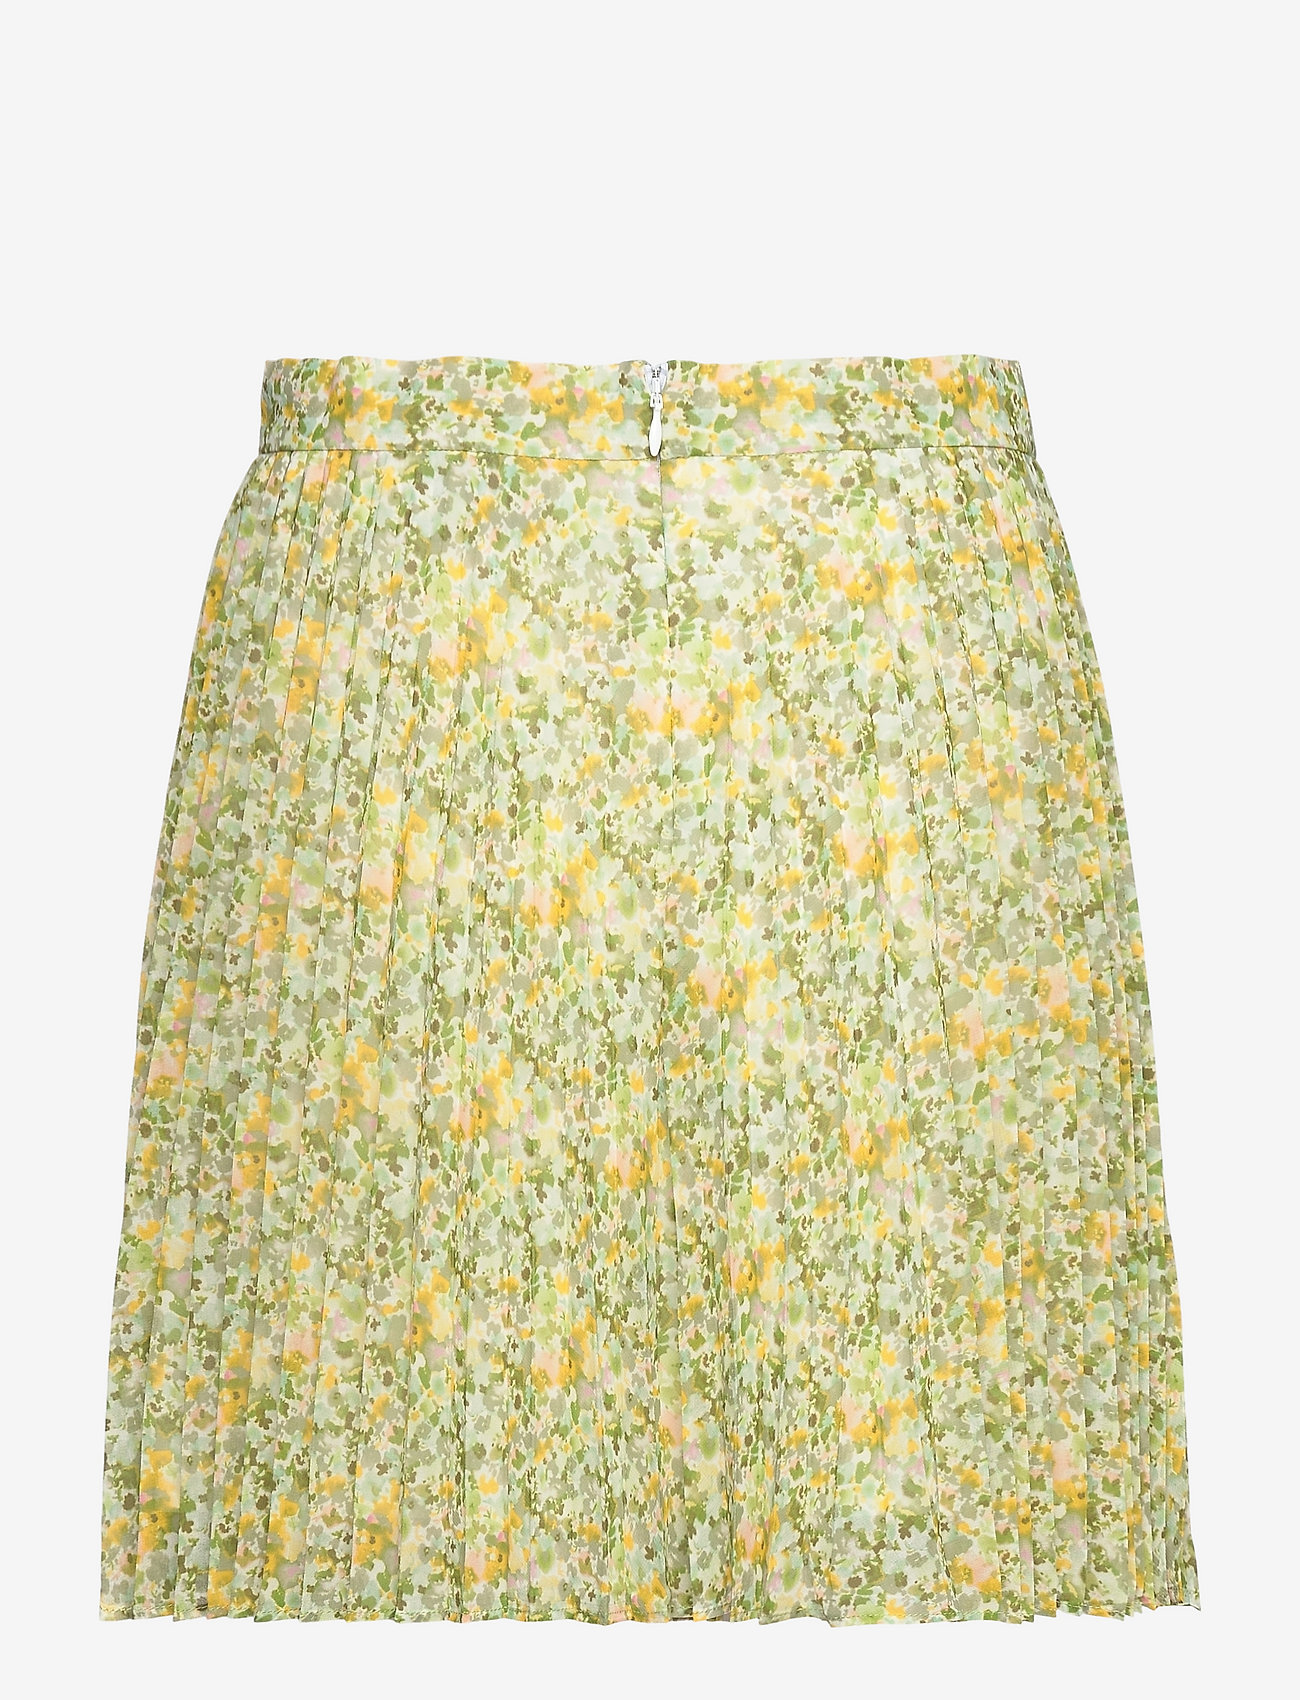 MAUD - Sara Skirt short - pleated skirts - floral - 1